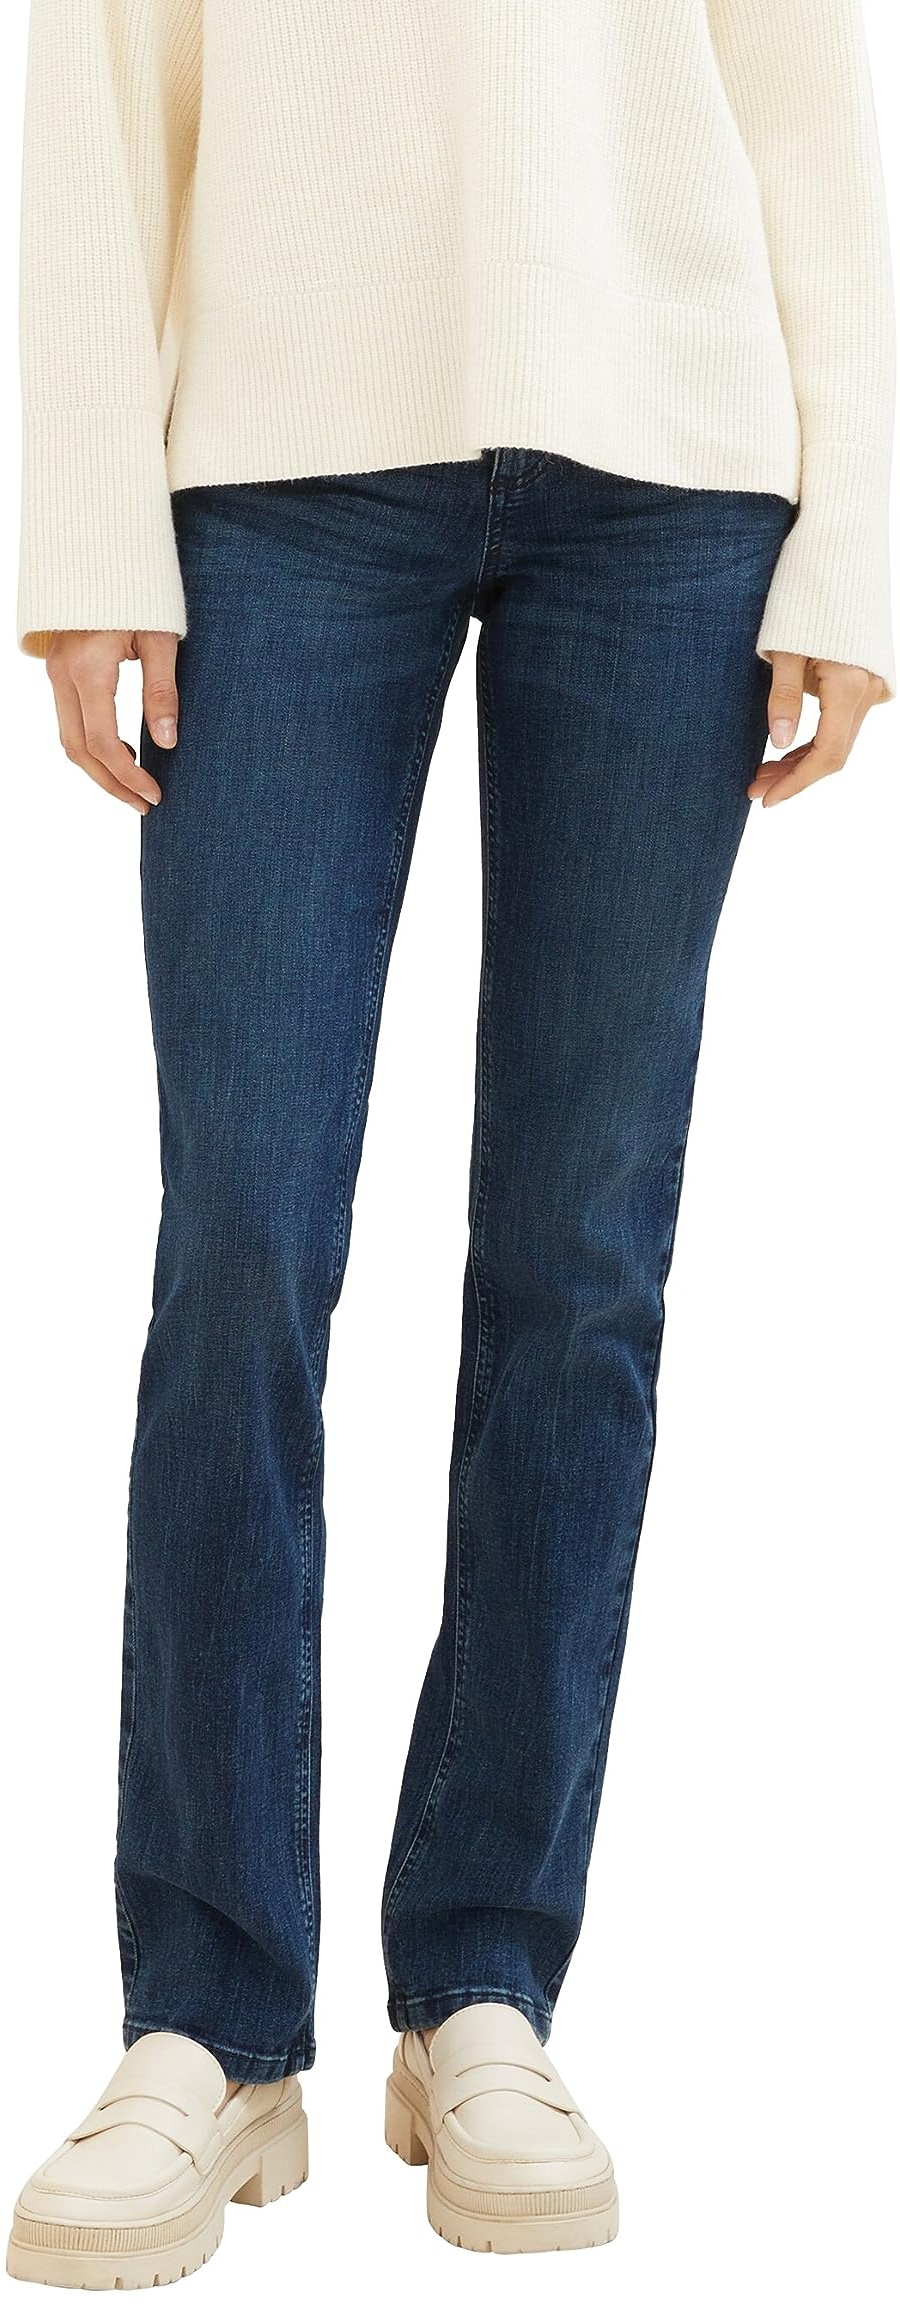 TOM TAILOR Damen 1008119 Alexa Straight Jeans, 10282 - Dark Stone Wash Denim, 27W / 30L EU